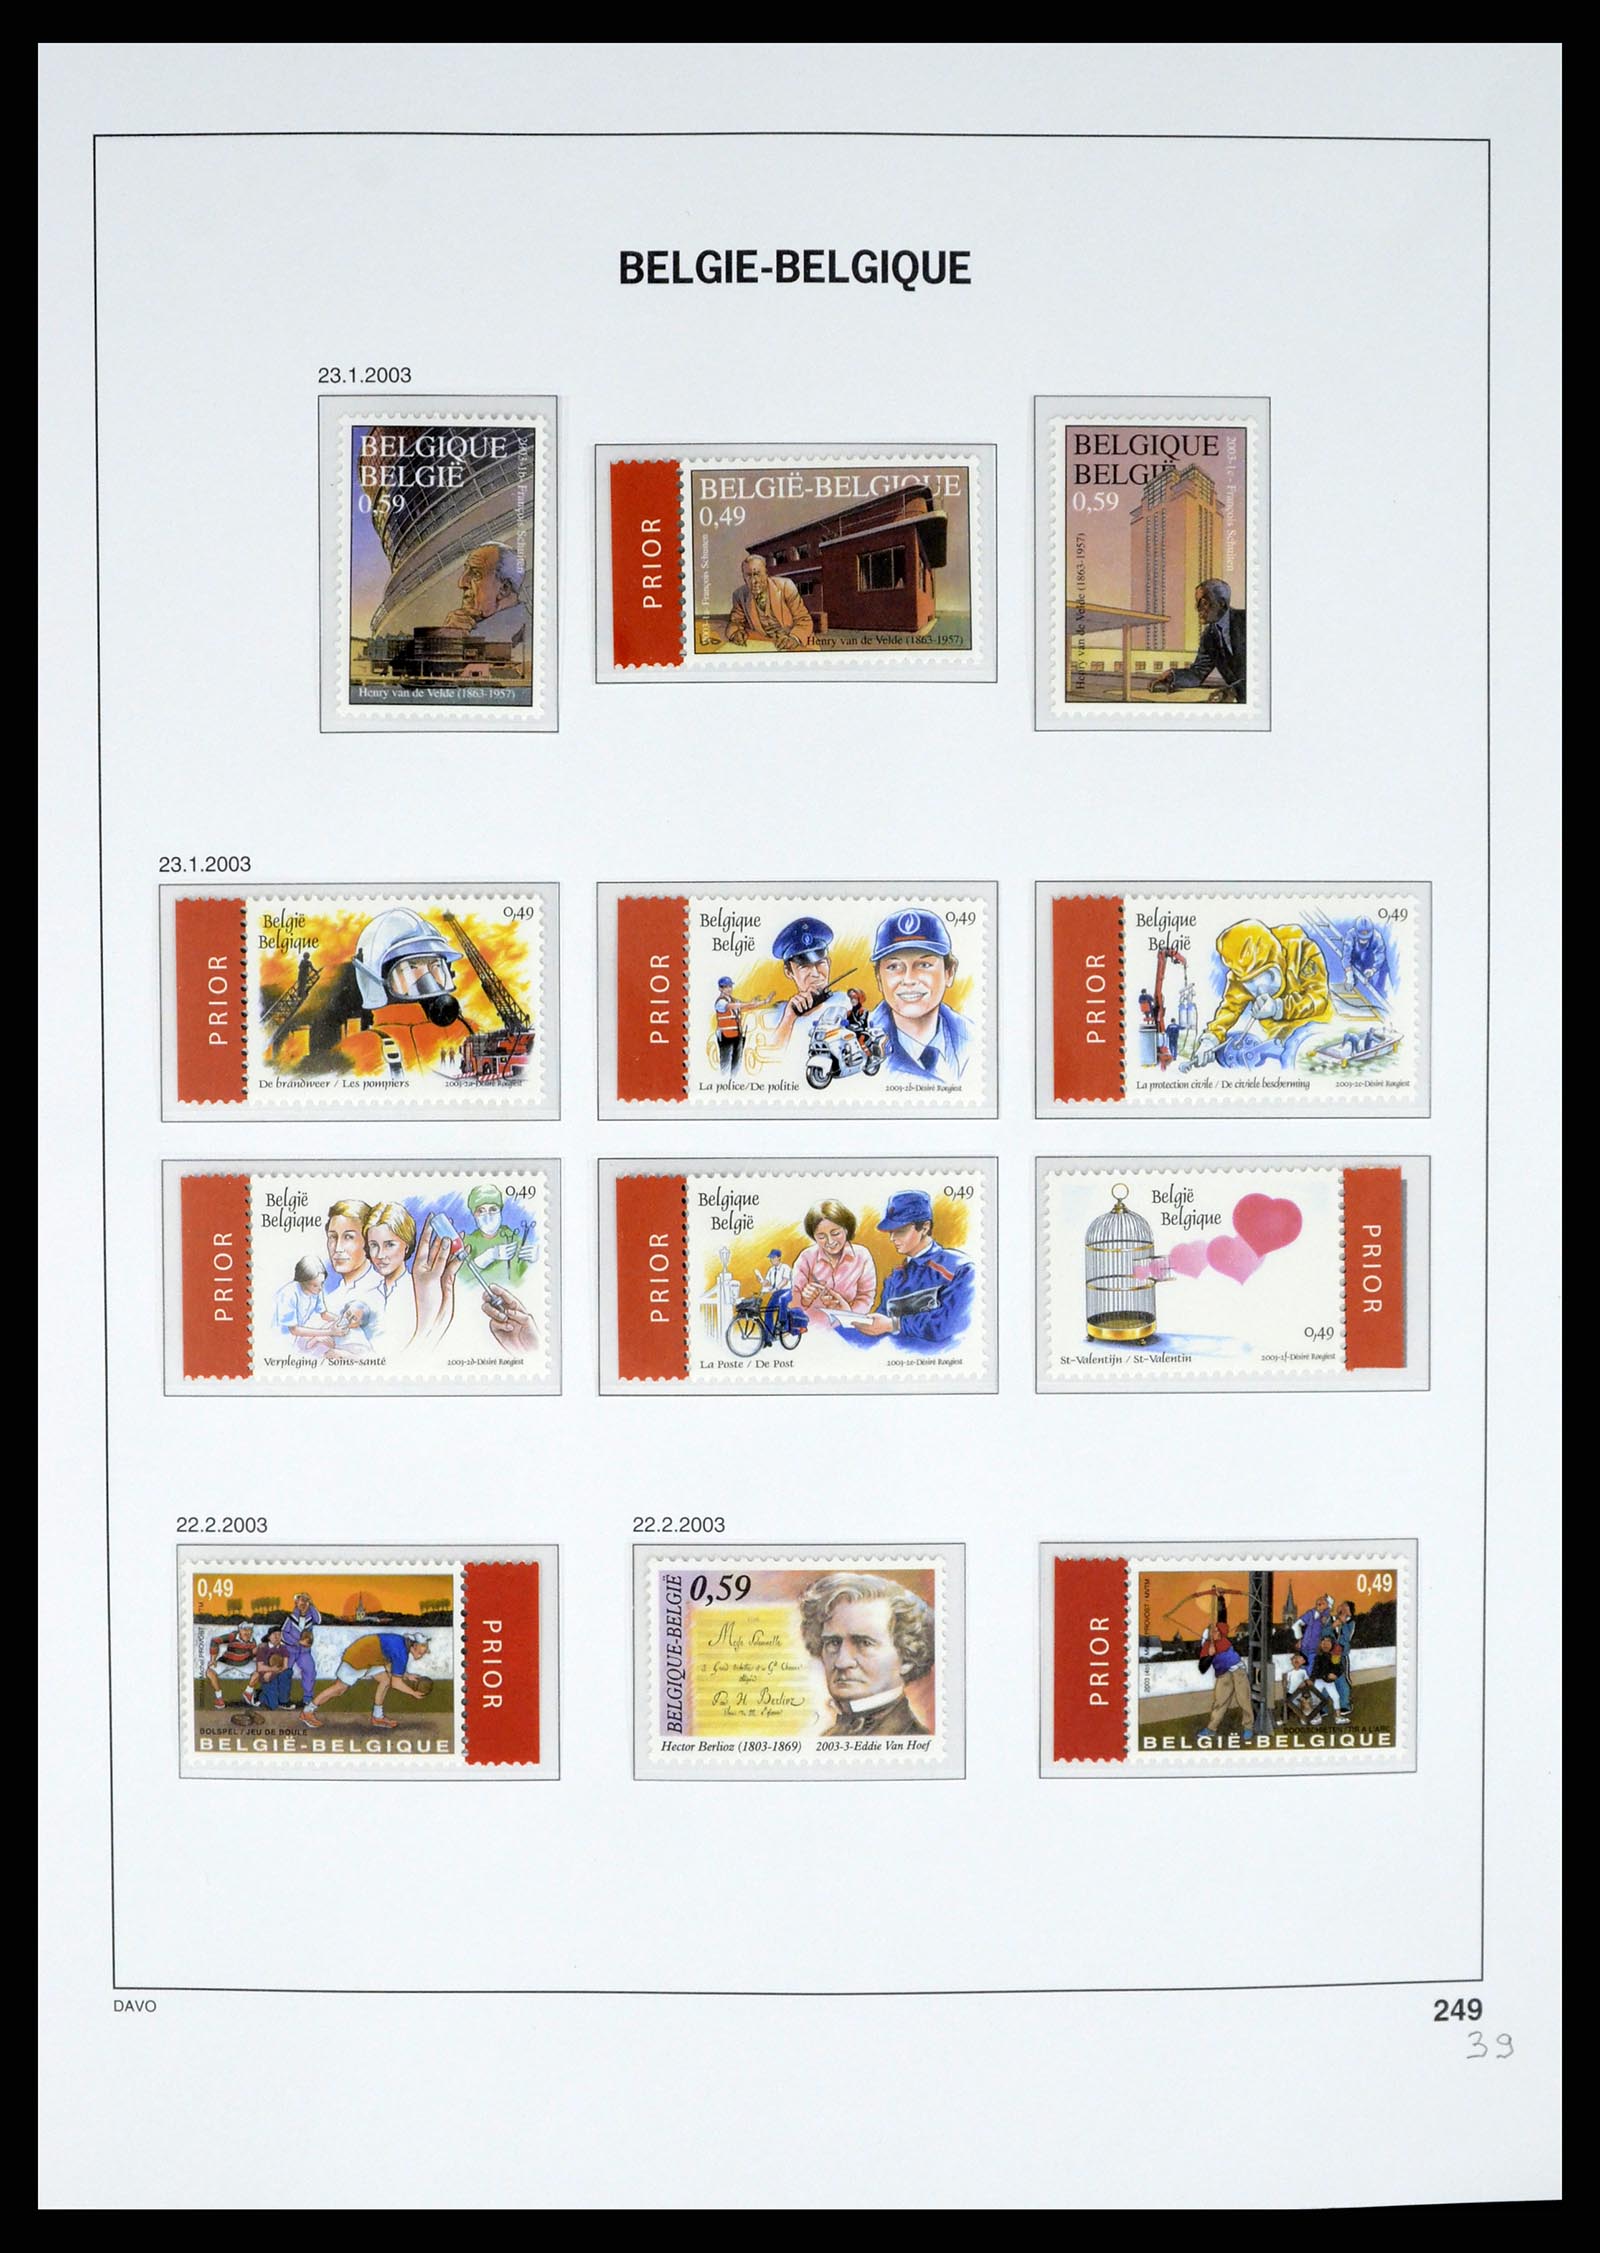 37367 304 - Stamp collection 37367 Belgium 1849-2003.